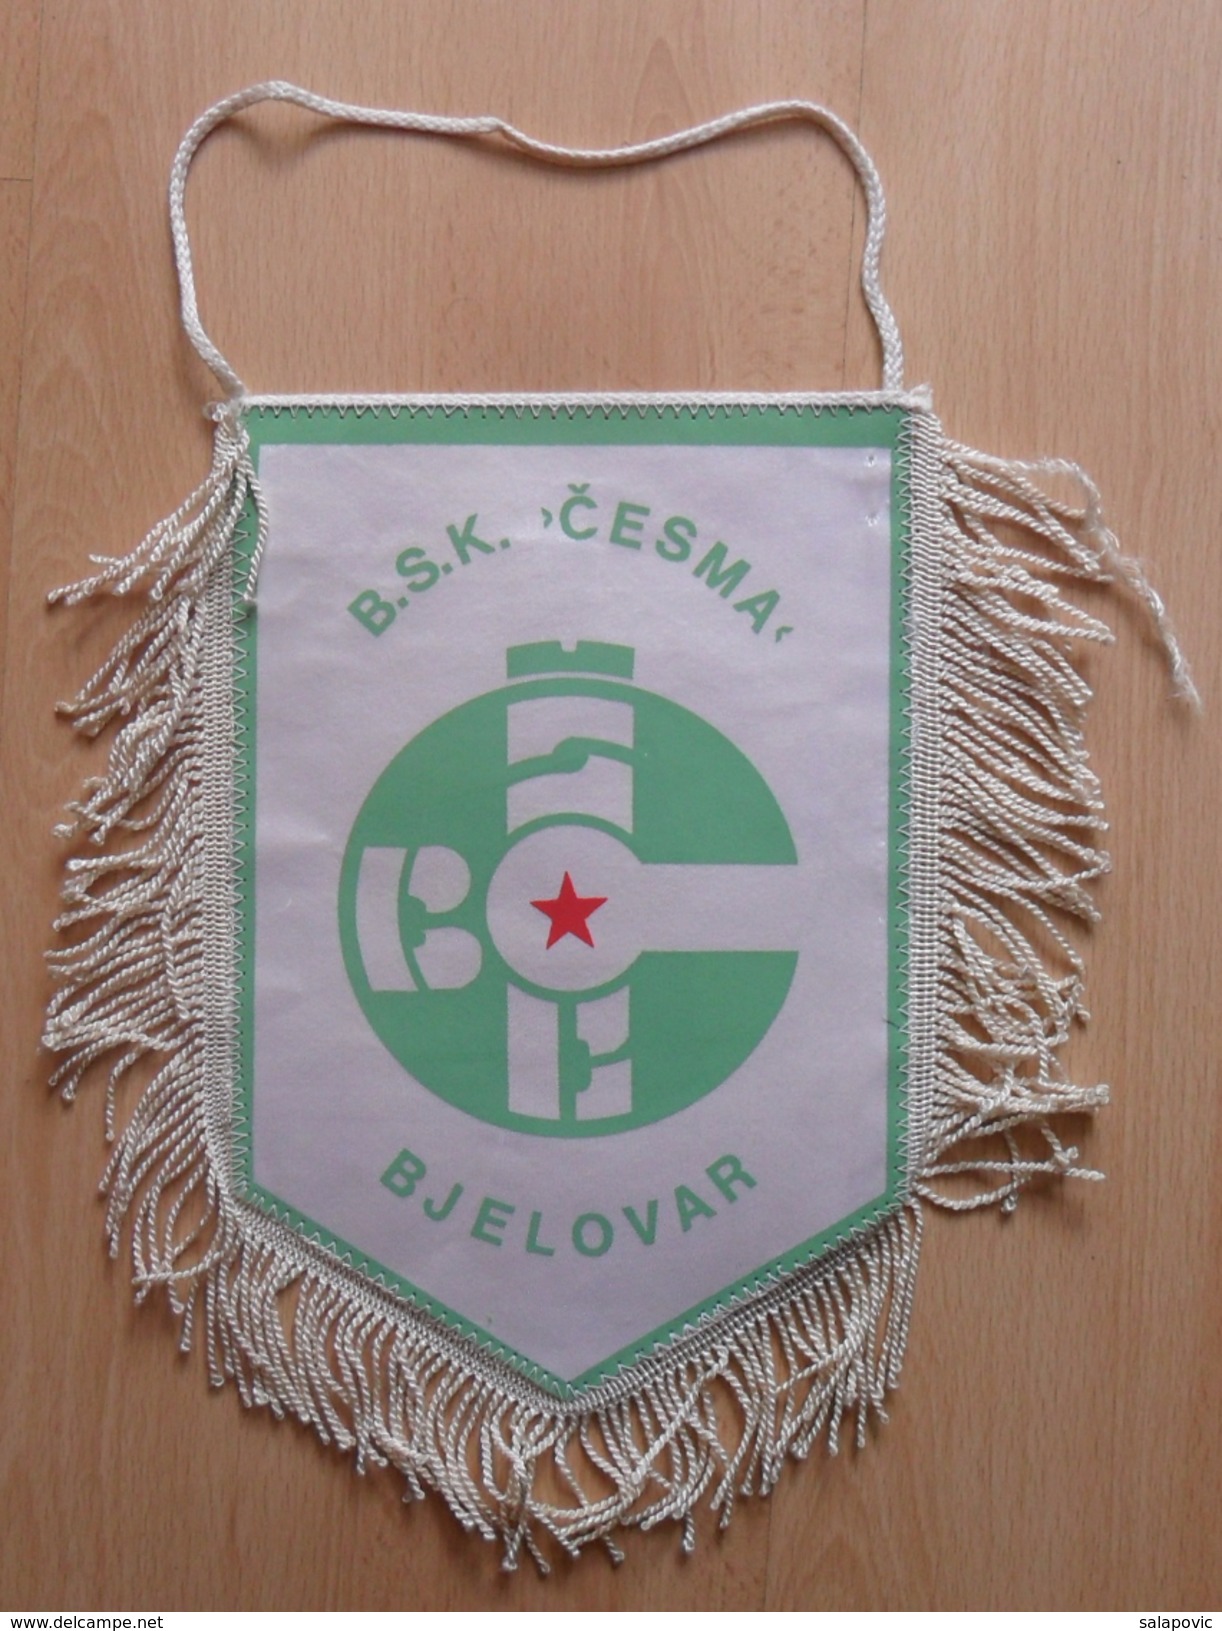 BSK CESMA BJELOVAR Croatia  FOOTBALL CLUB, SOCCER / FUTBOL / CALCIO  OLD PENNANT, SPORTS FLAG - Bekleidung, Souvenirs Und Sonstige